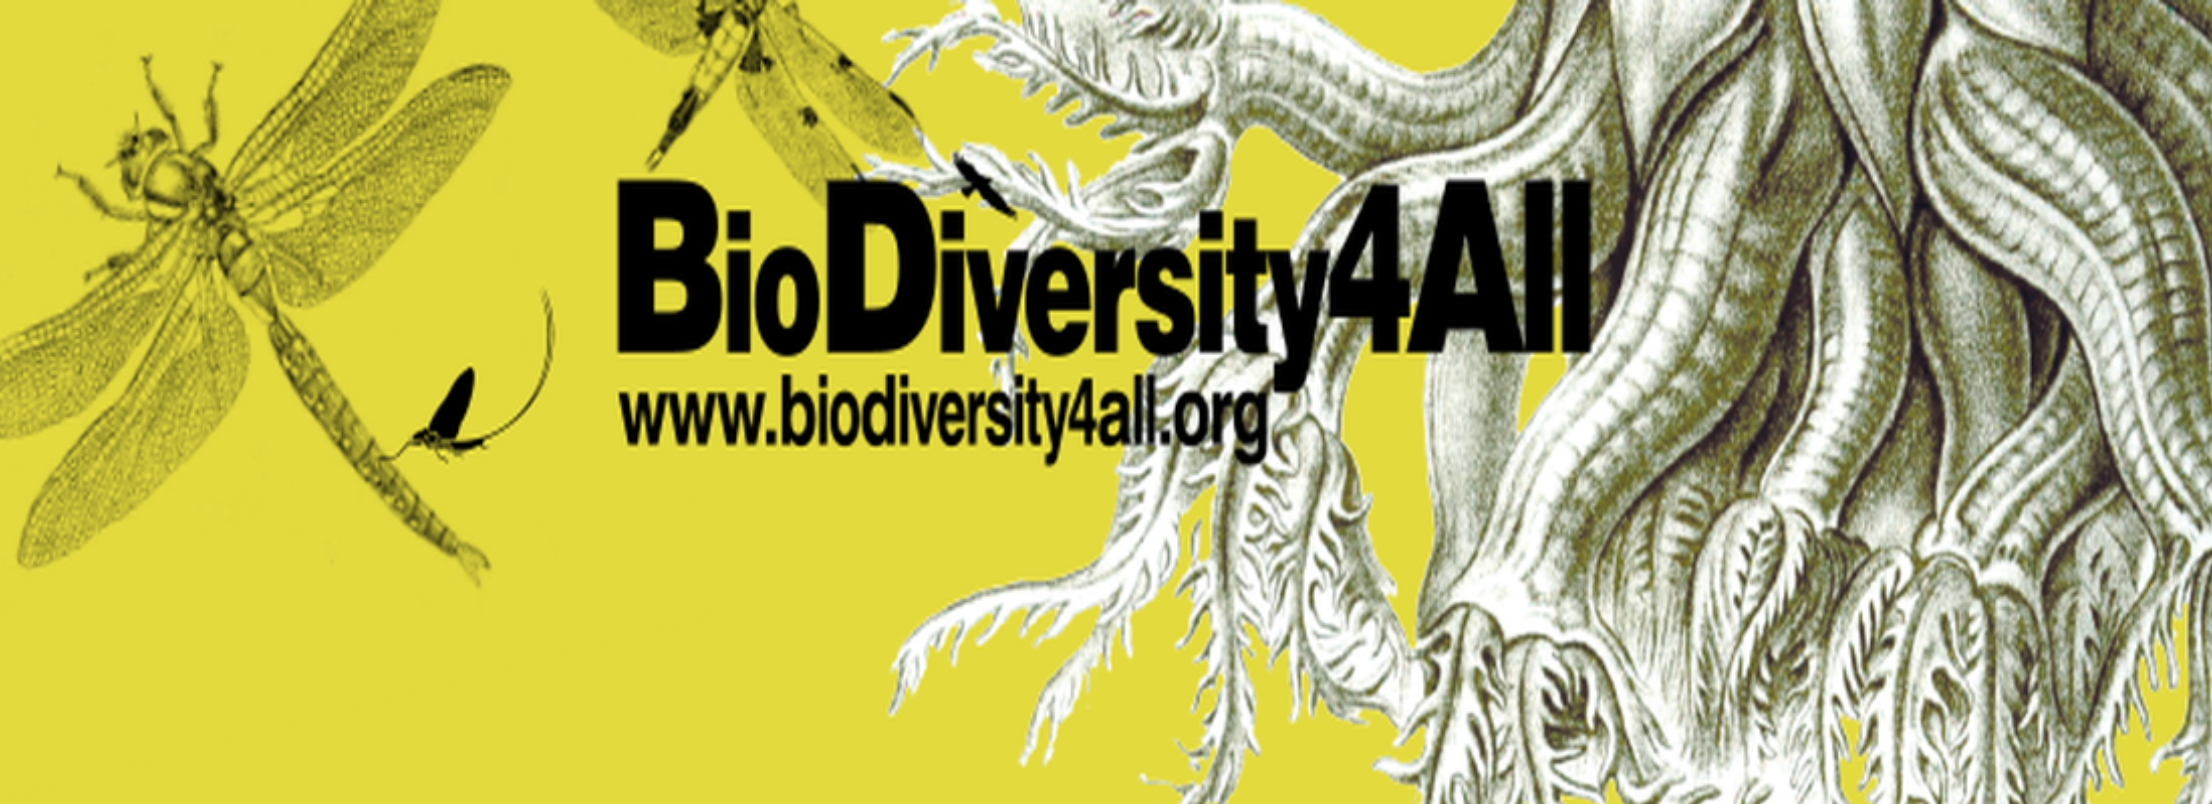 Biodiversity4All